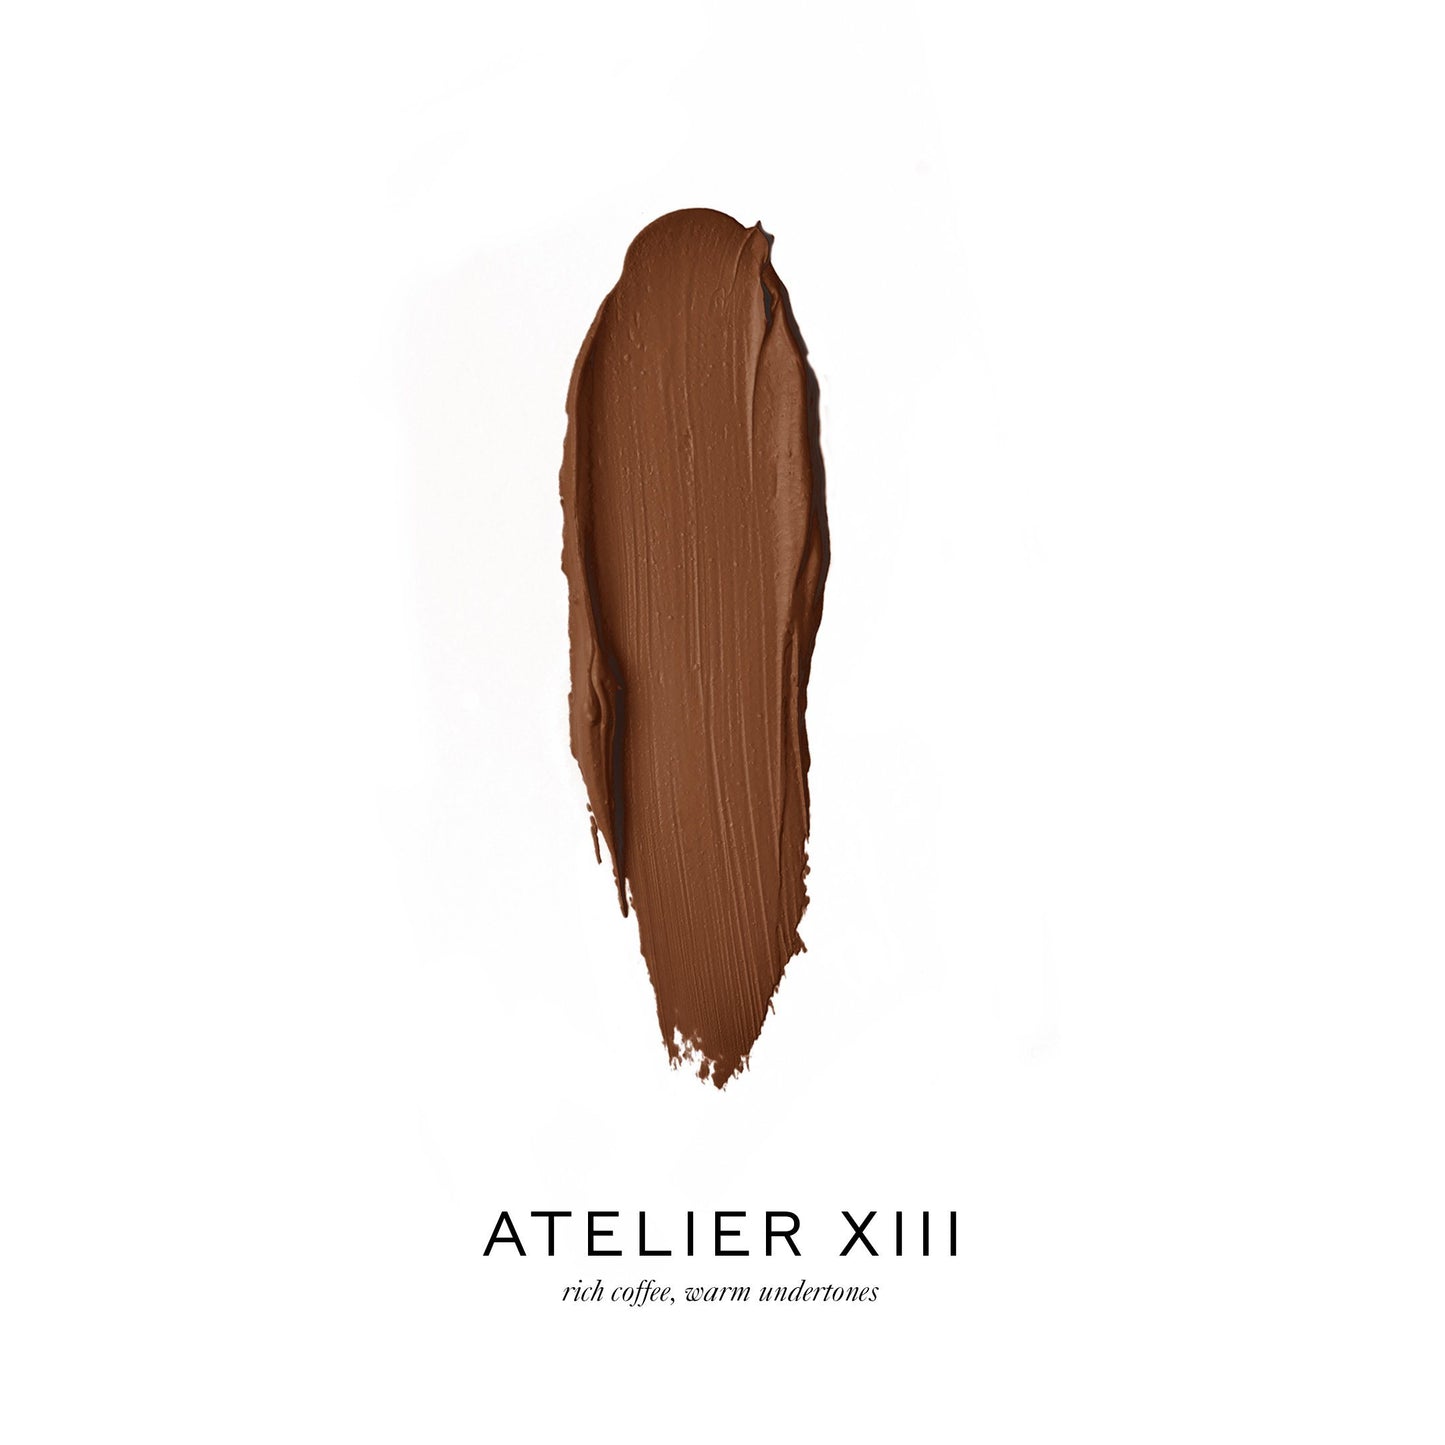 Atelier XIII (rich coffee, warm undertone)